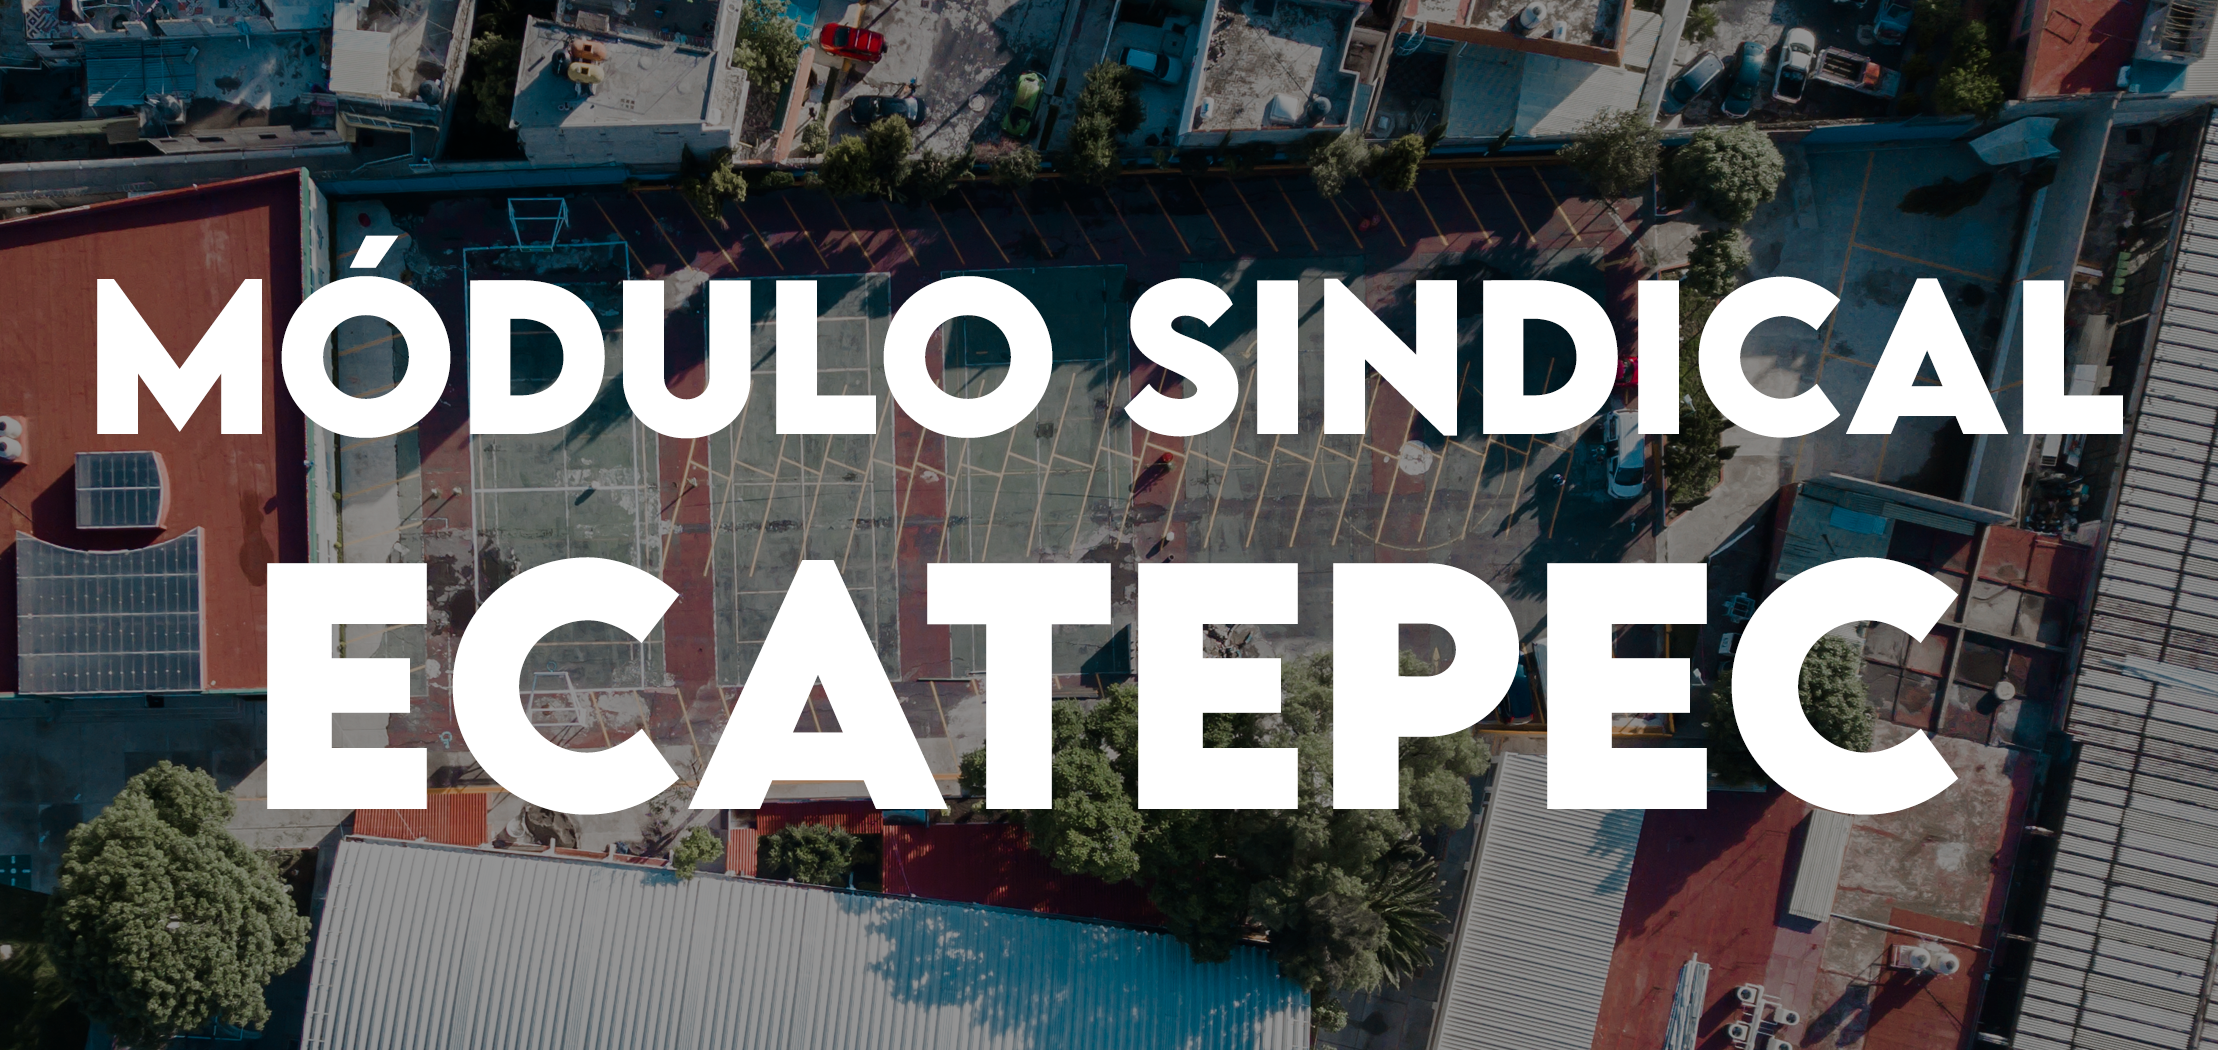 Módulo Sindical Ecatepec